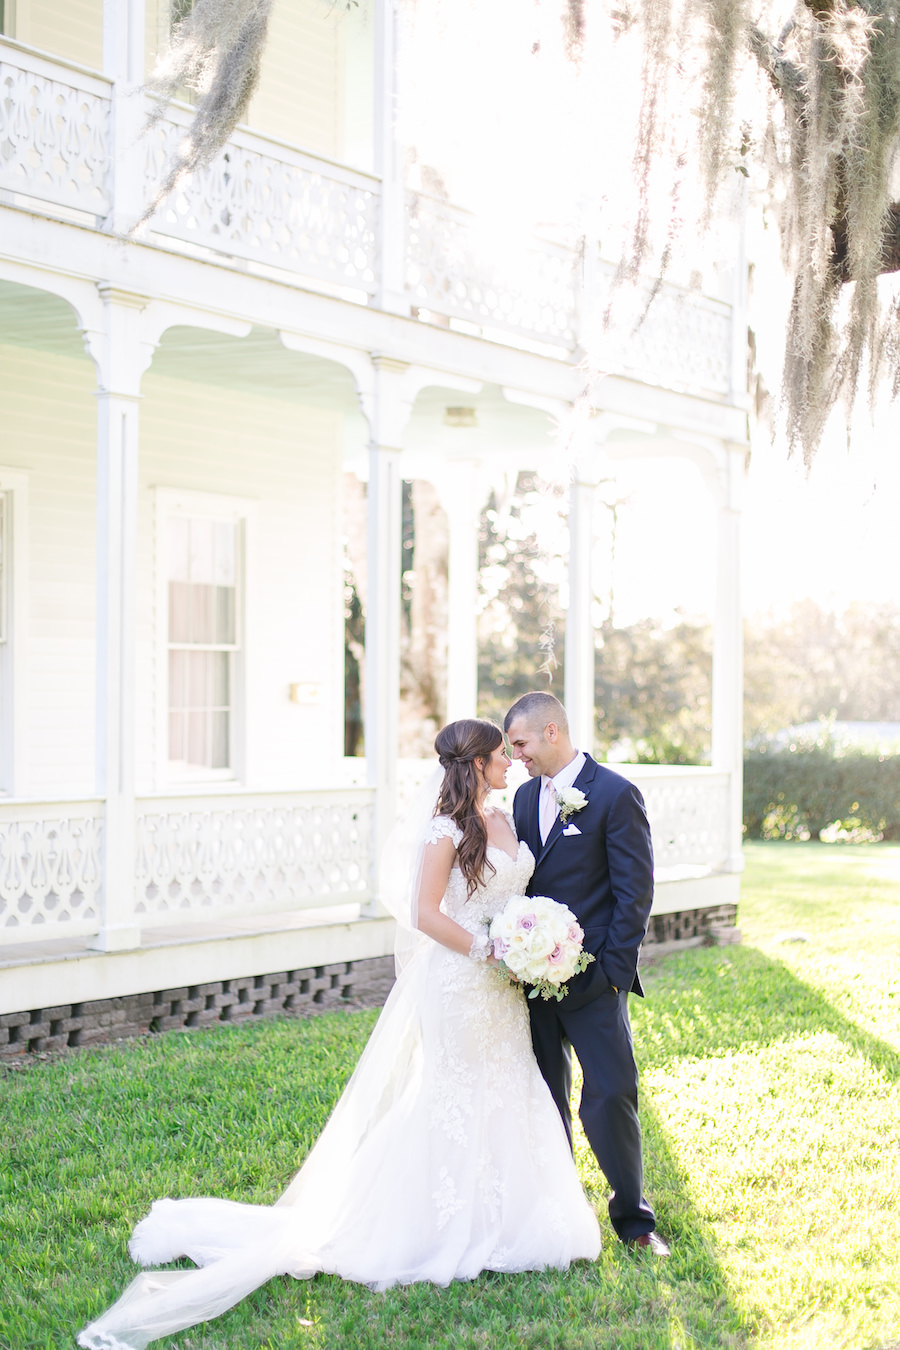 Outdoor Tampa Bay Wedding Portrait at Old Victorian Southern Home | Rustic Tampa Bay Wedding Venue Saxon Manor